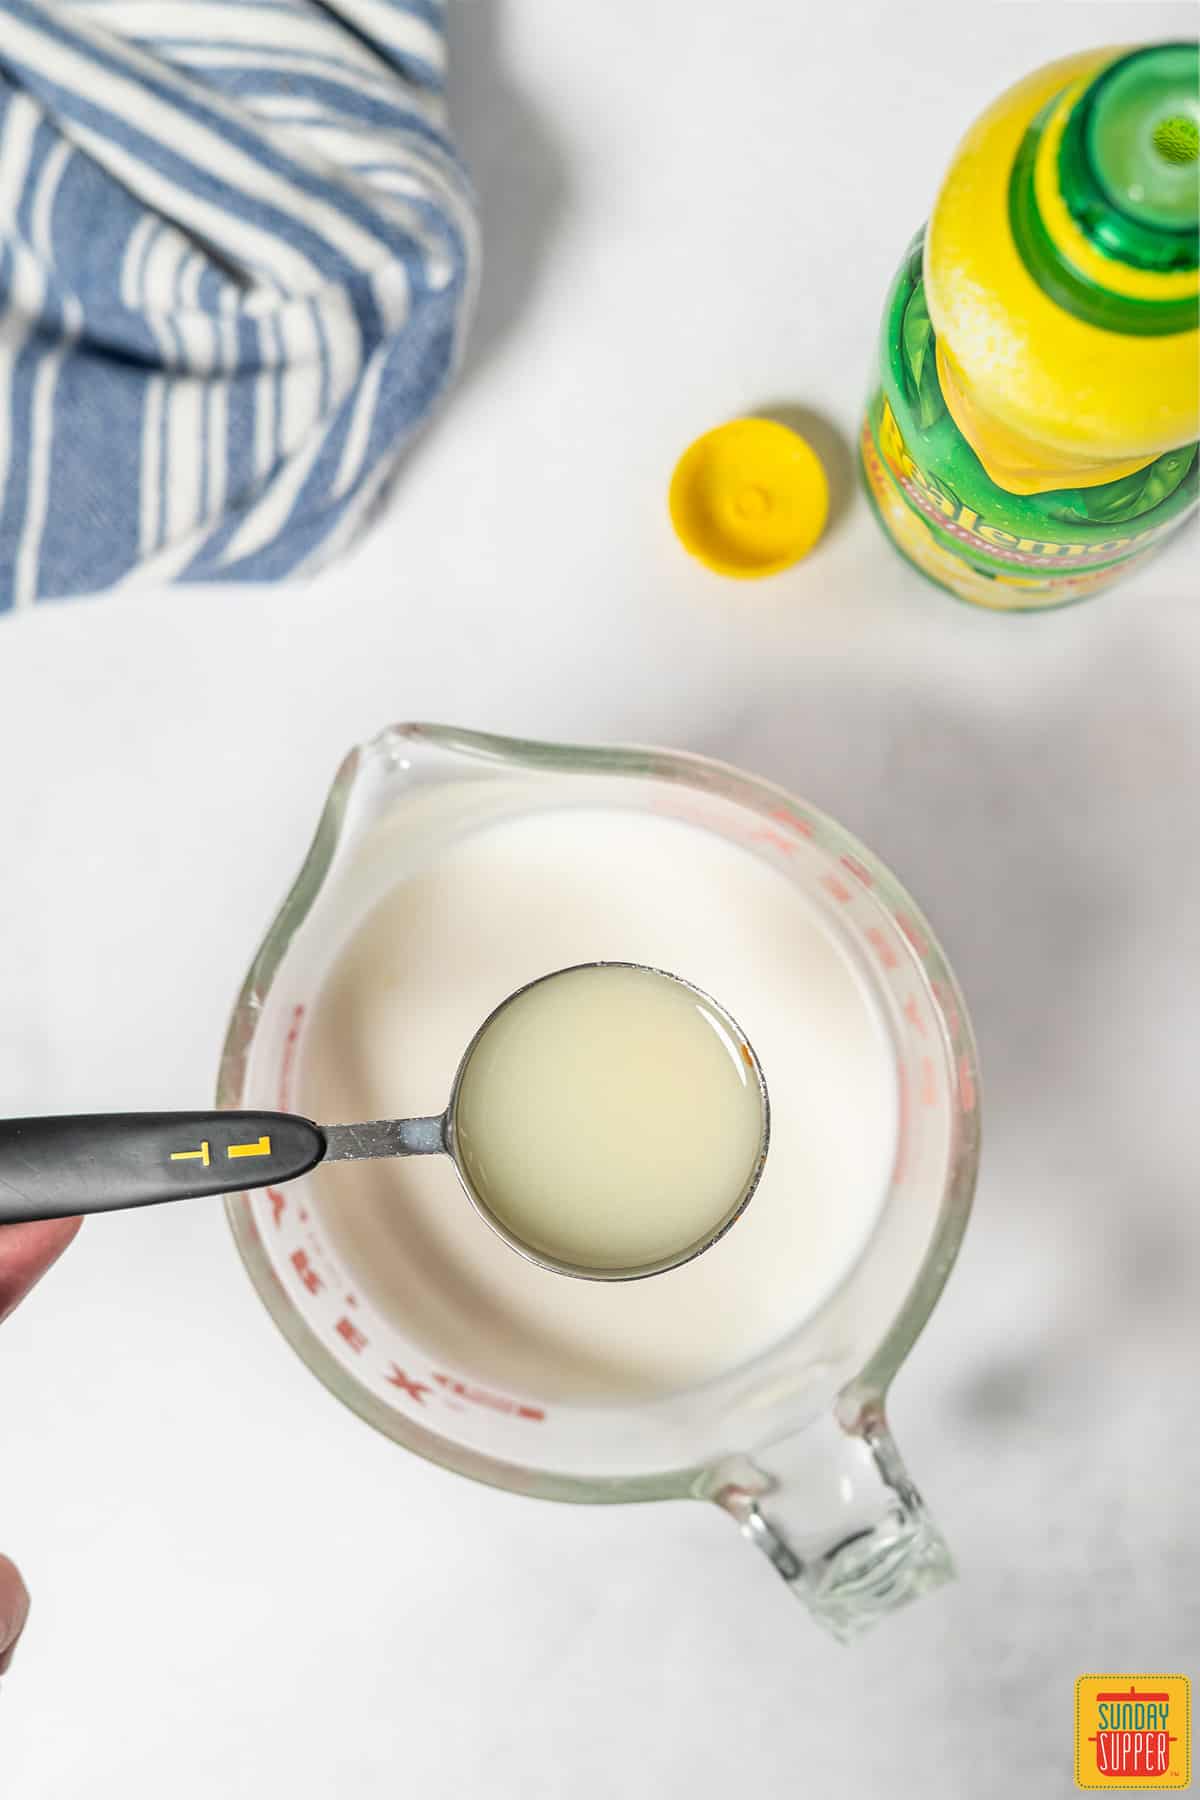 Lemon juice in a measuring spoon over a measuring cup of milk